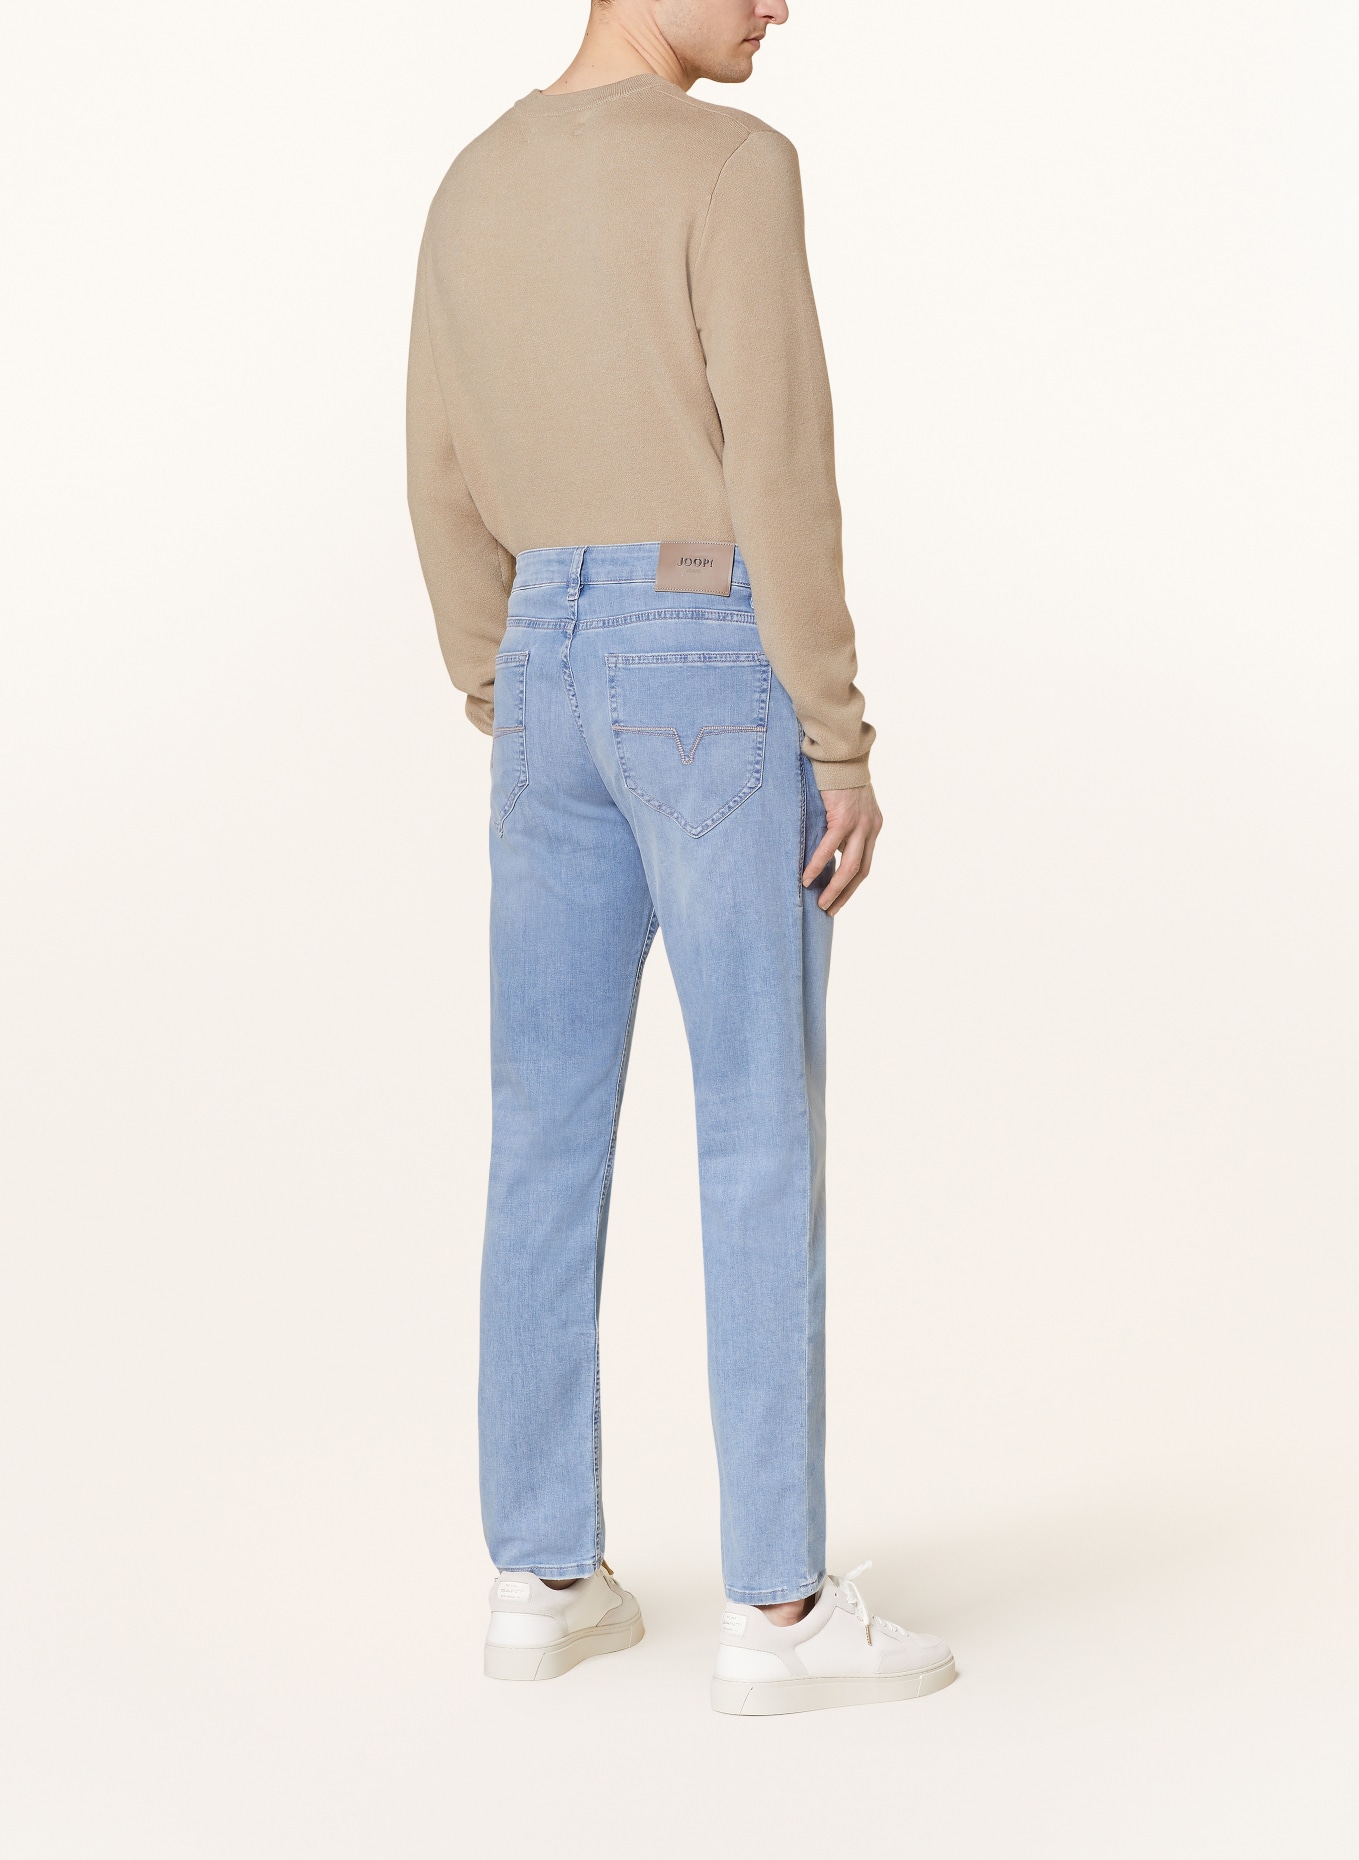 JOOP! JEANS Jeans MITCH Modern Fit, Farbe: 445 TurquoiseAqua              445 (Bild 3)